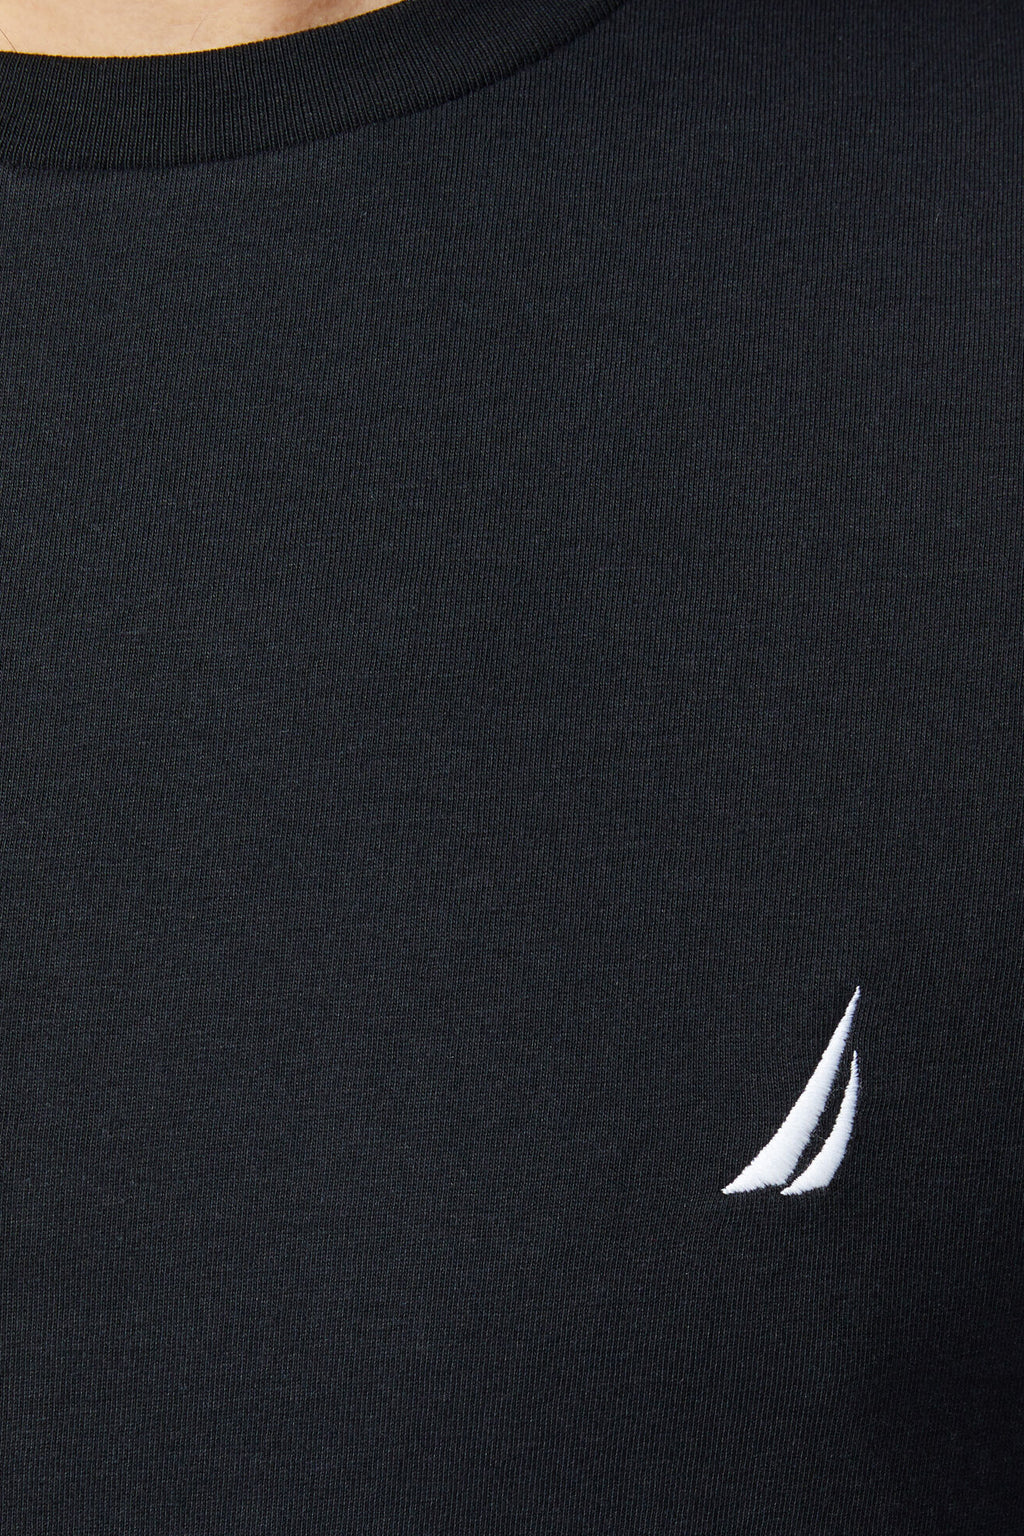 Nautica - Solid Long Sleeve Crewneck Tee T-Shirt